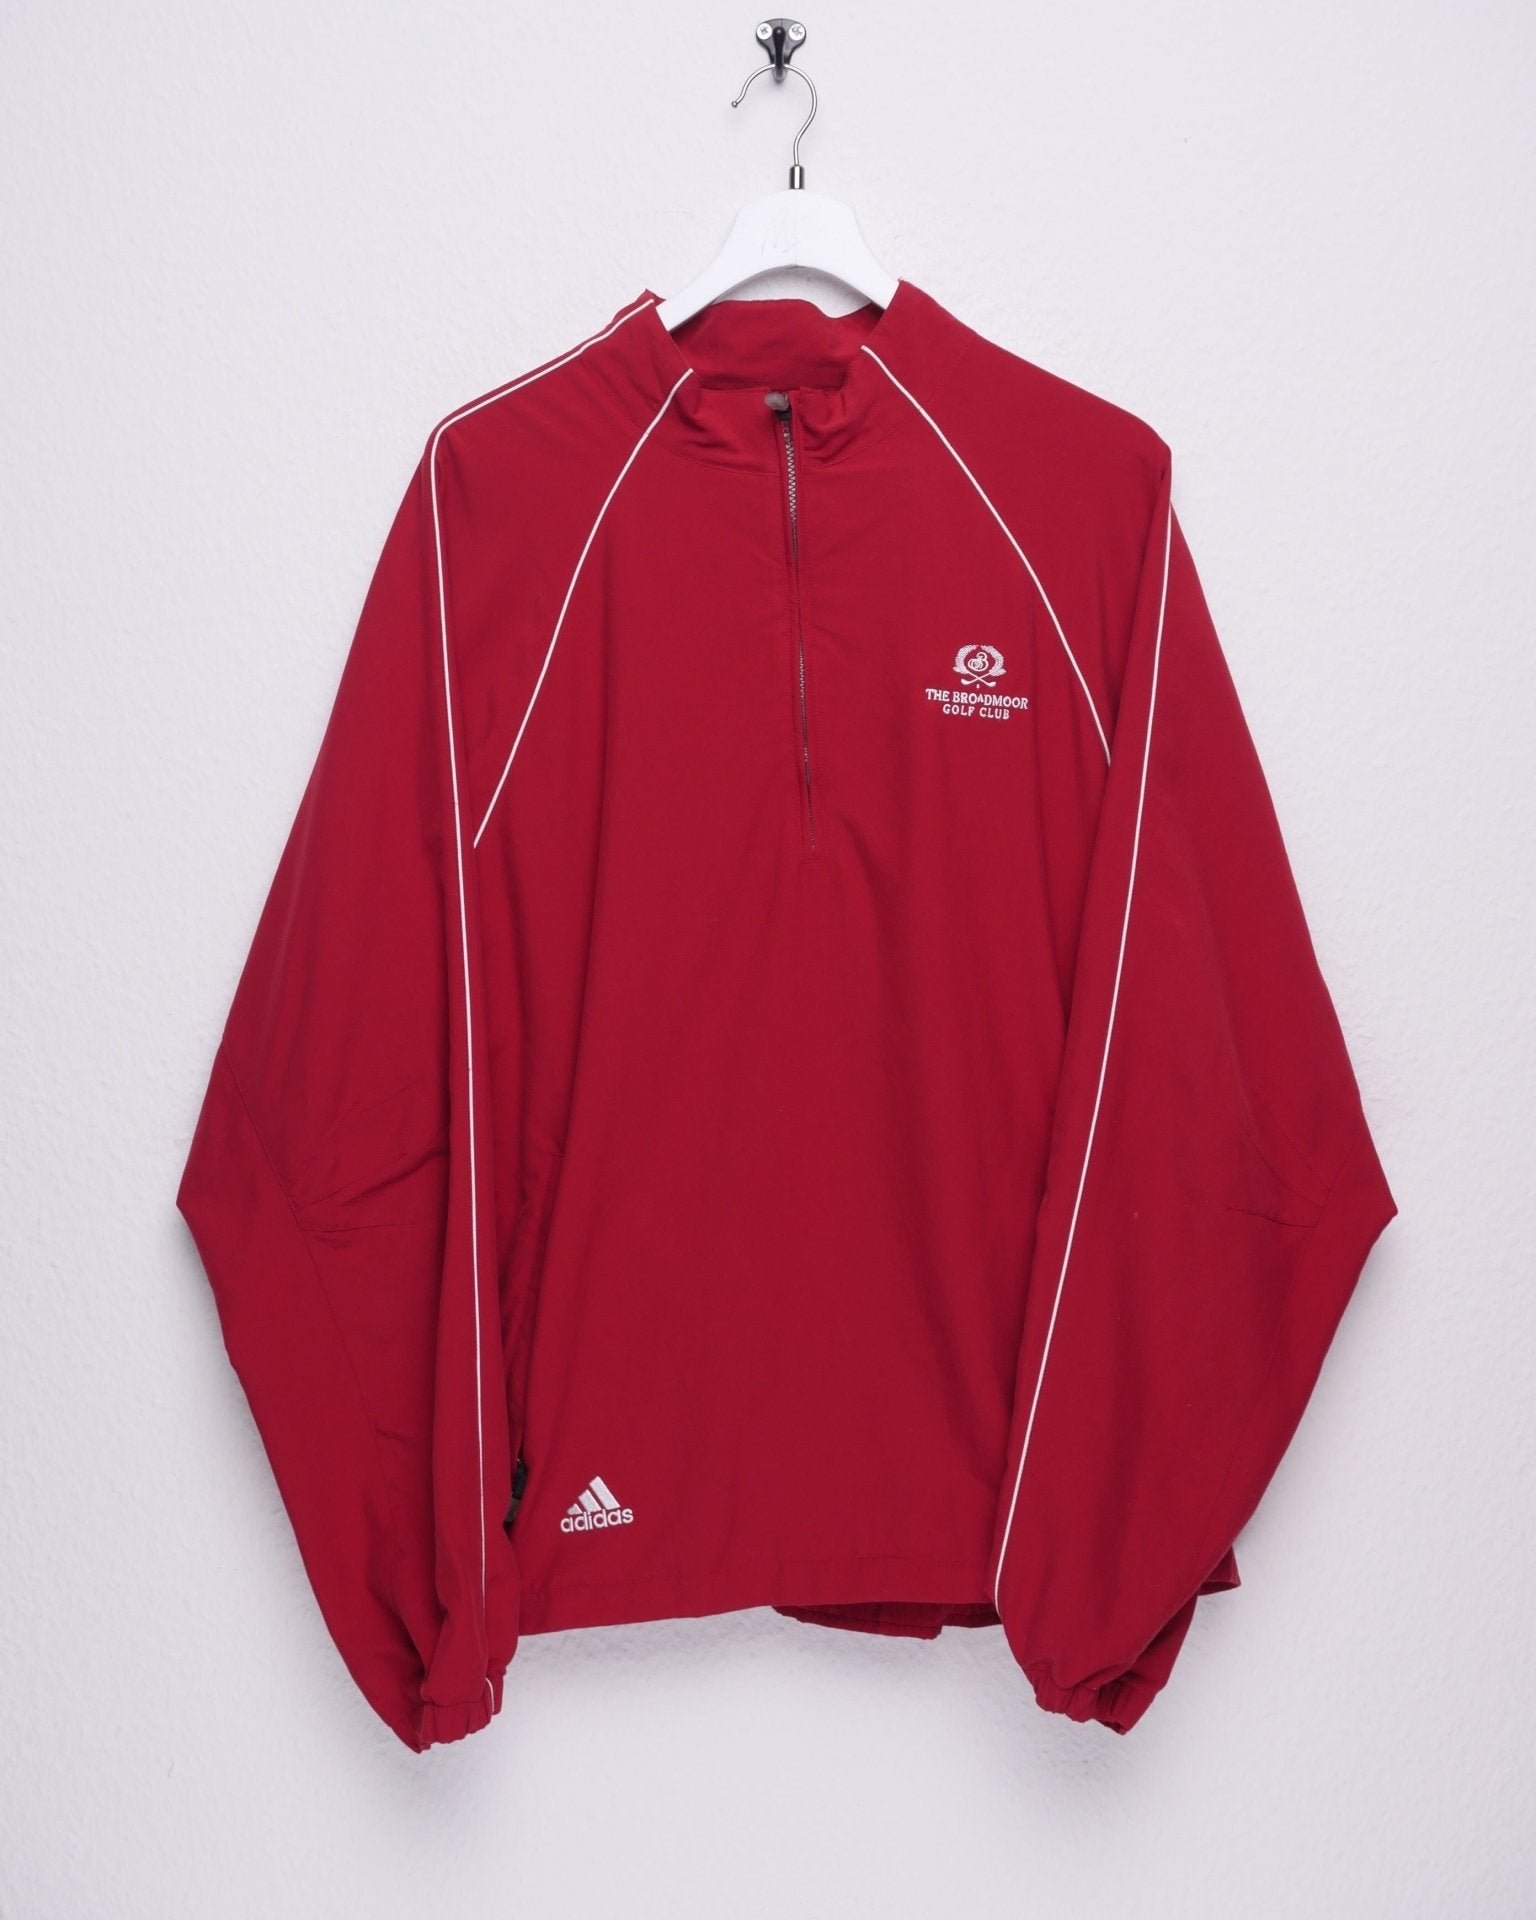 Adidas embroidered Logo 'The Broadmoor Golf Club' red Half Zip Track Jacket - Peeces